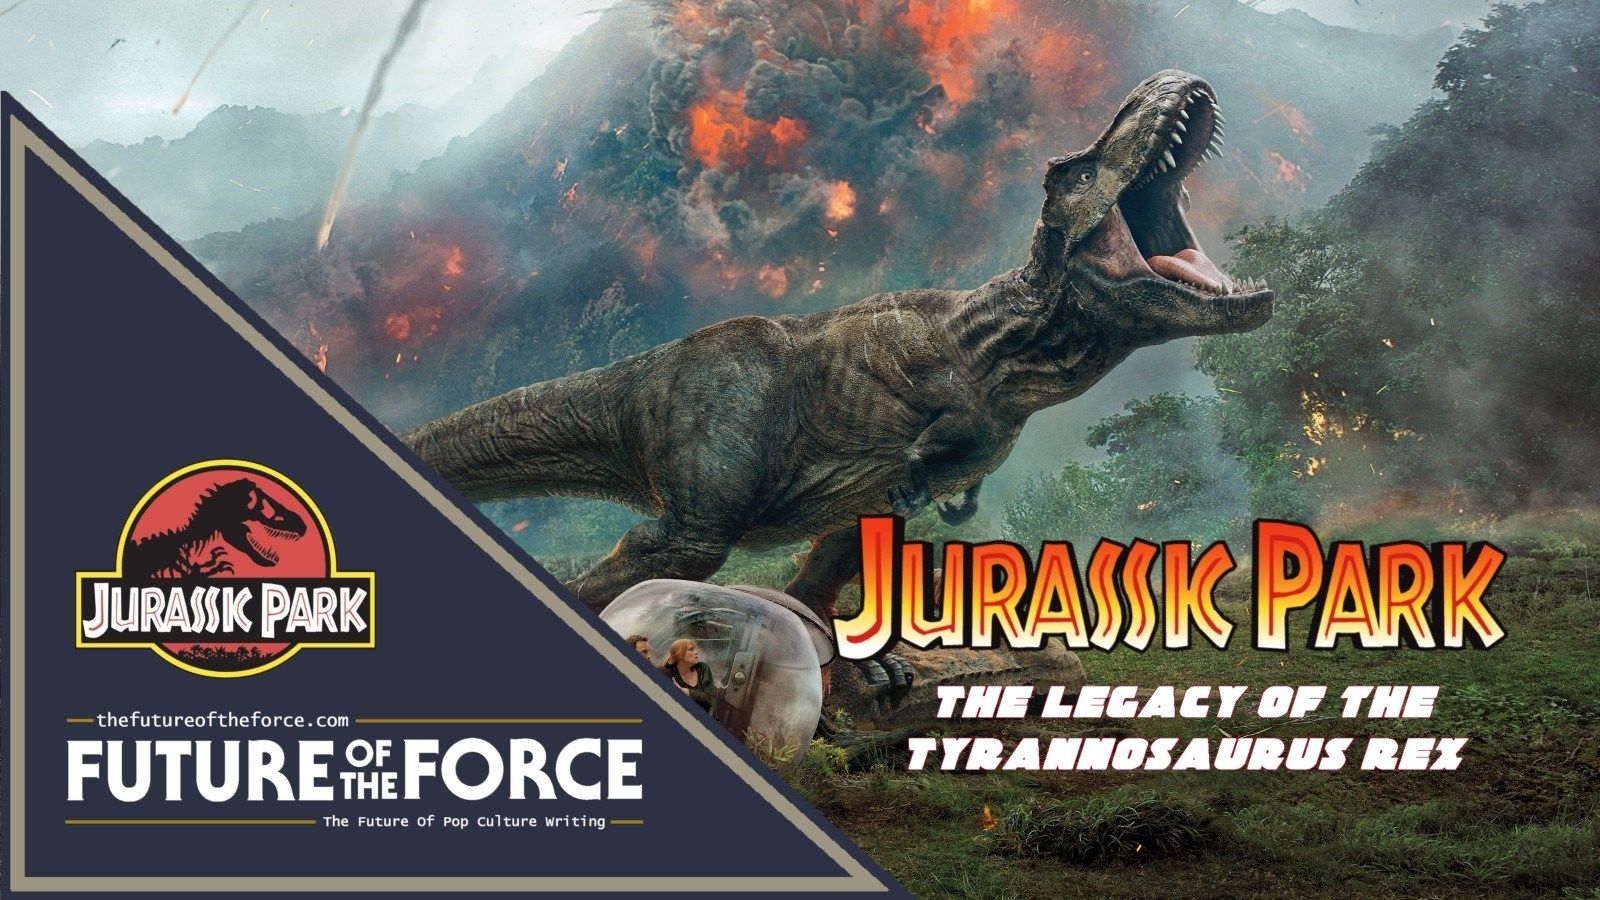 Jurassic World. The Legacy of the Tyrannosaurus Rex